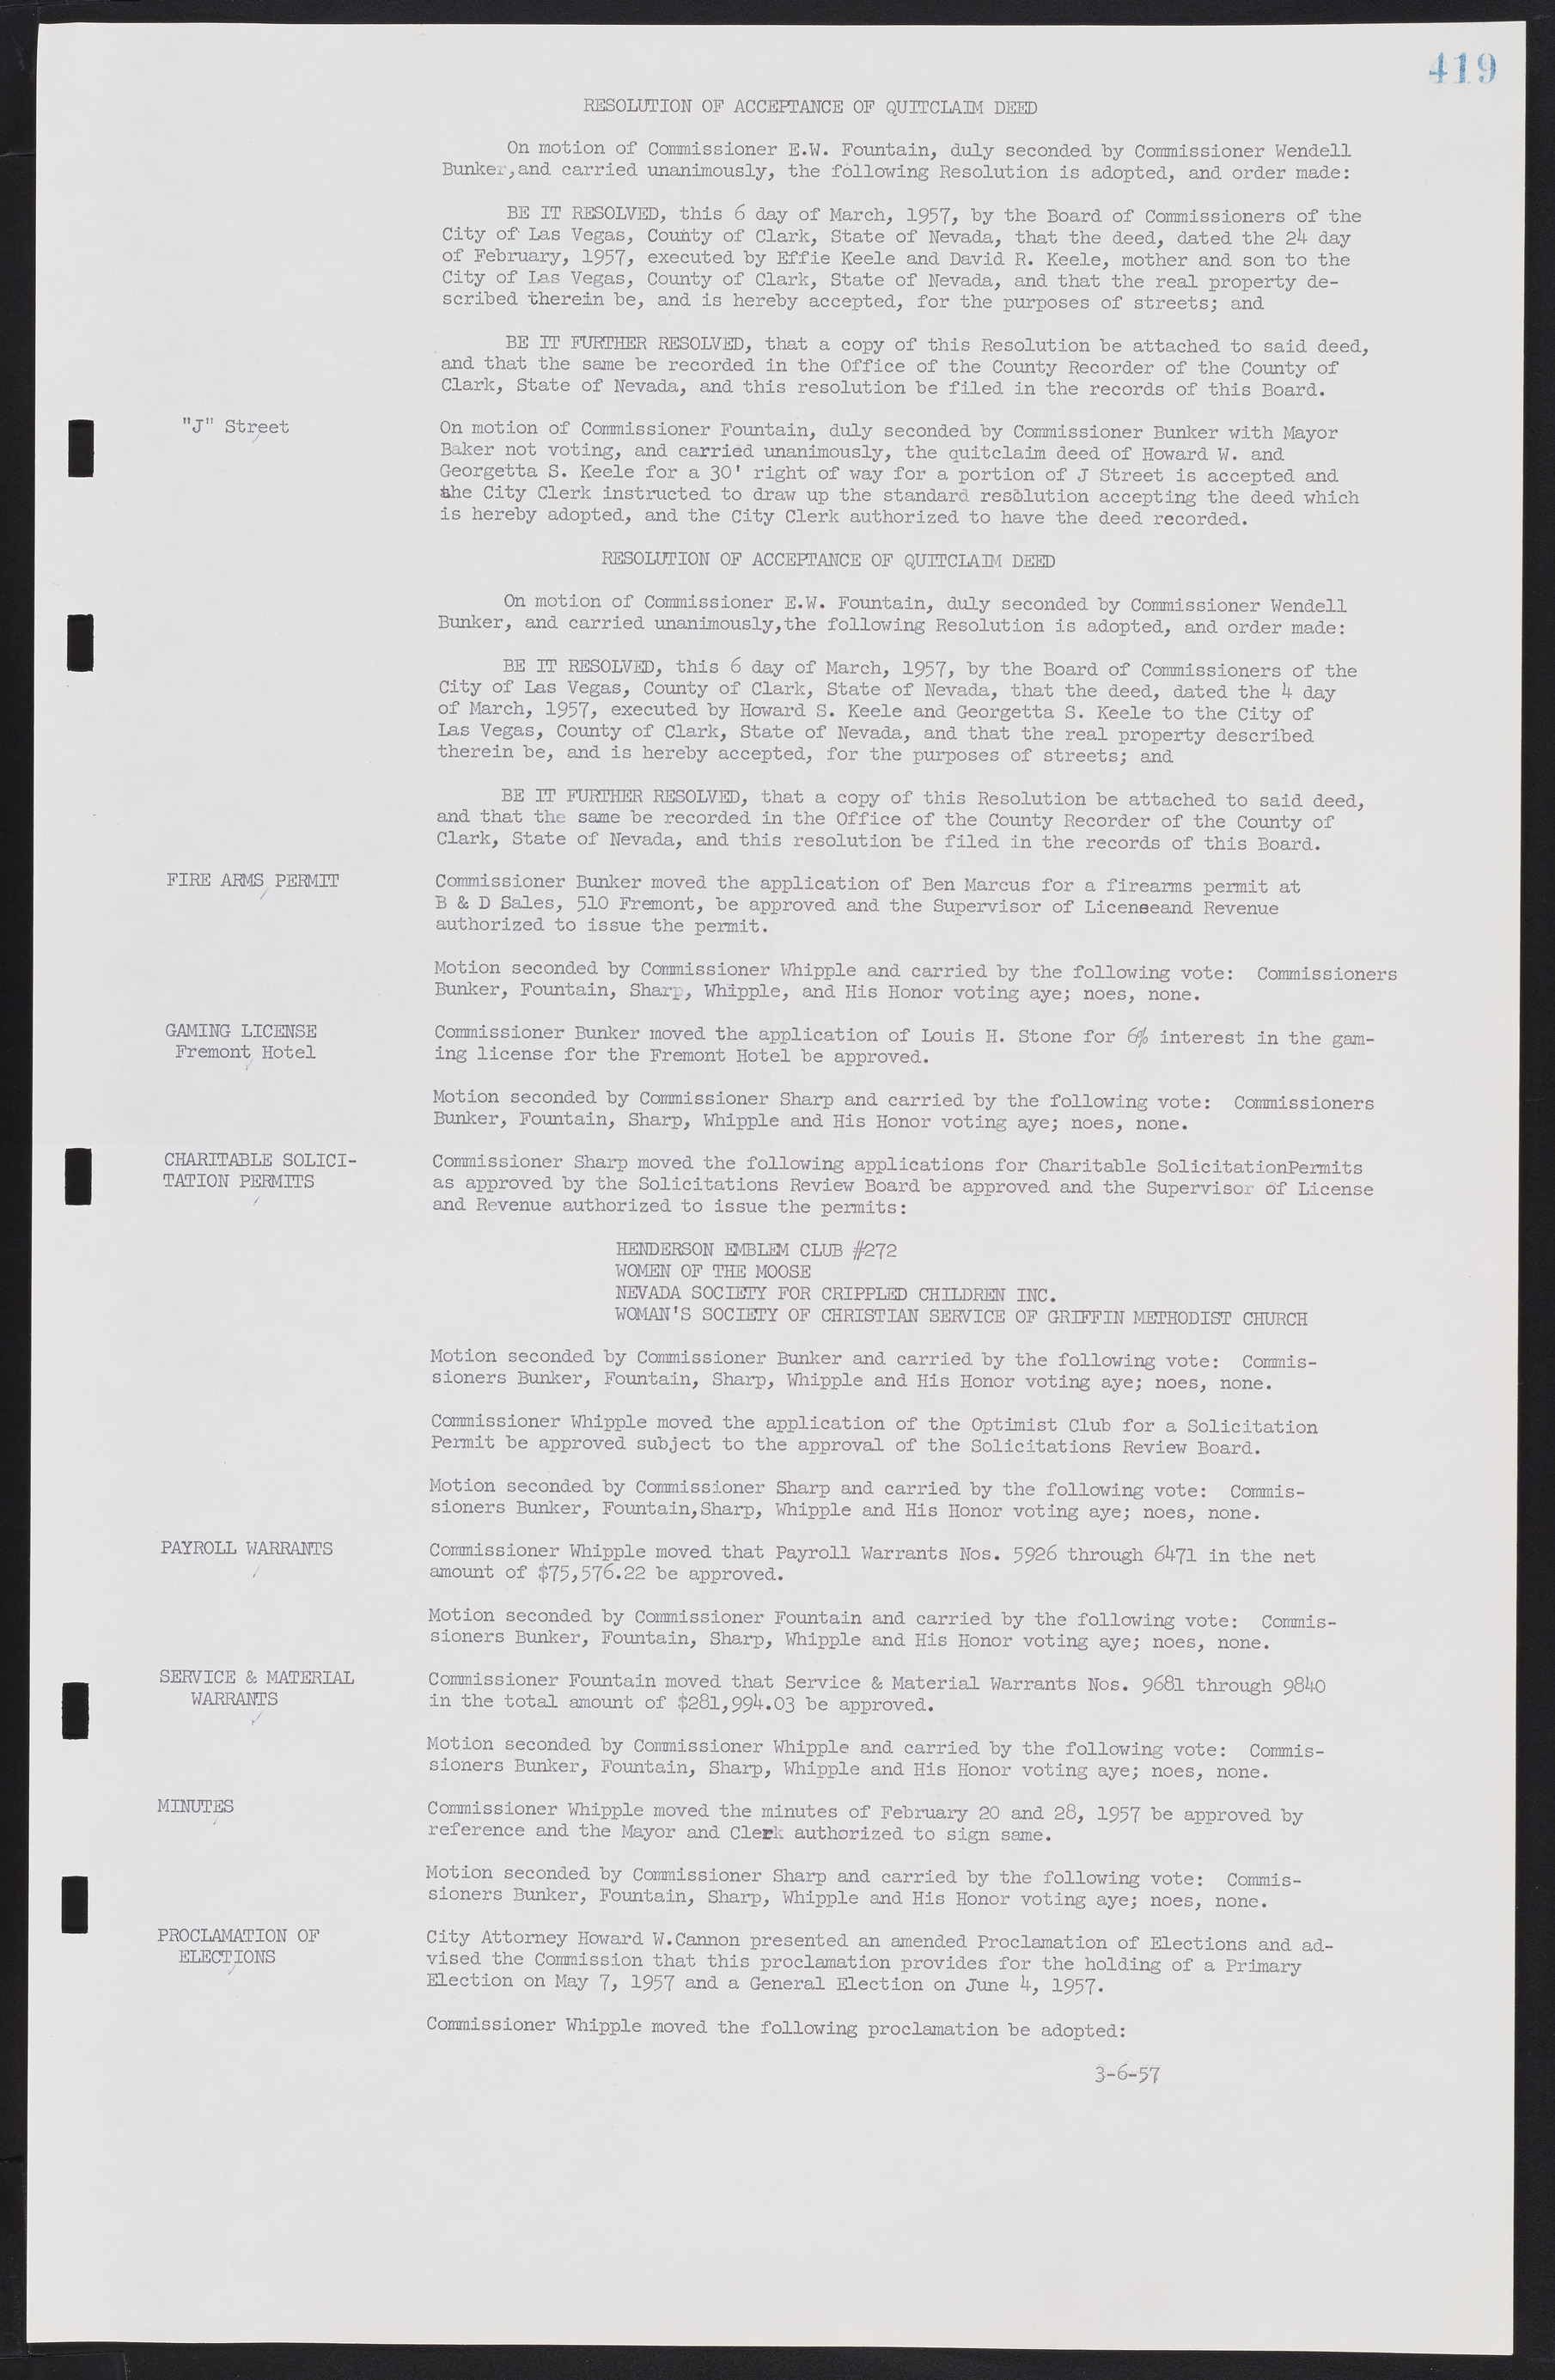 Las Vegas City Commission Minutes, September 21, 1955 to November 20, 1957, lvc000010-439